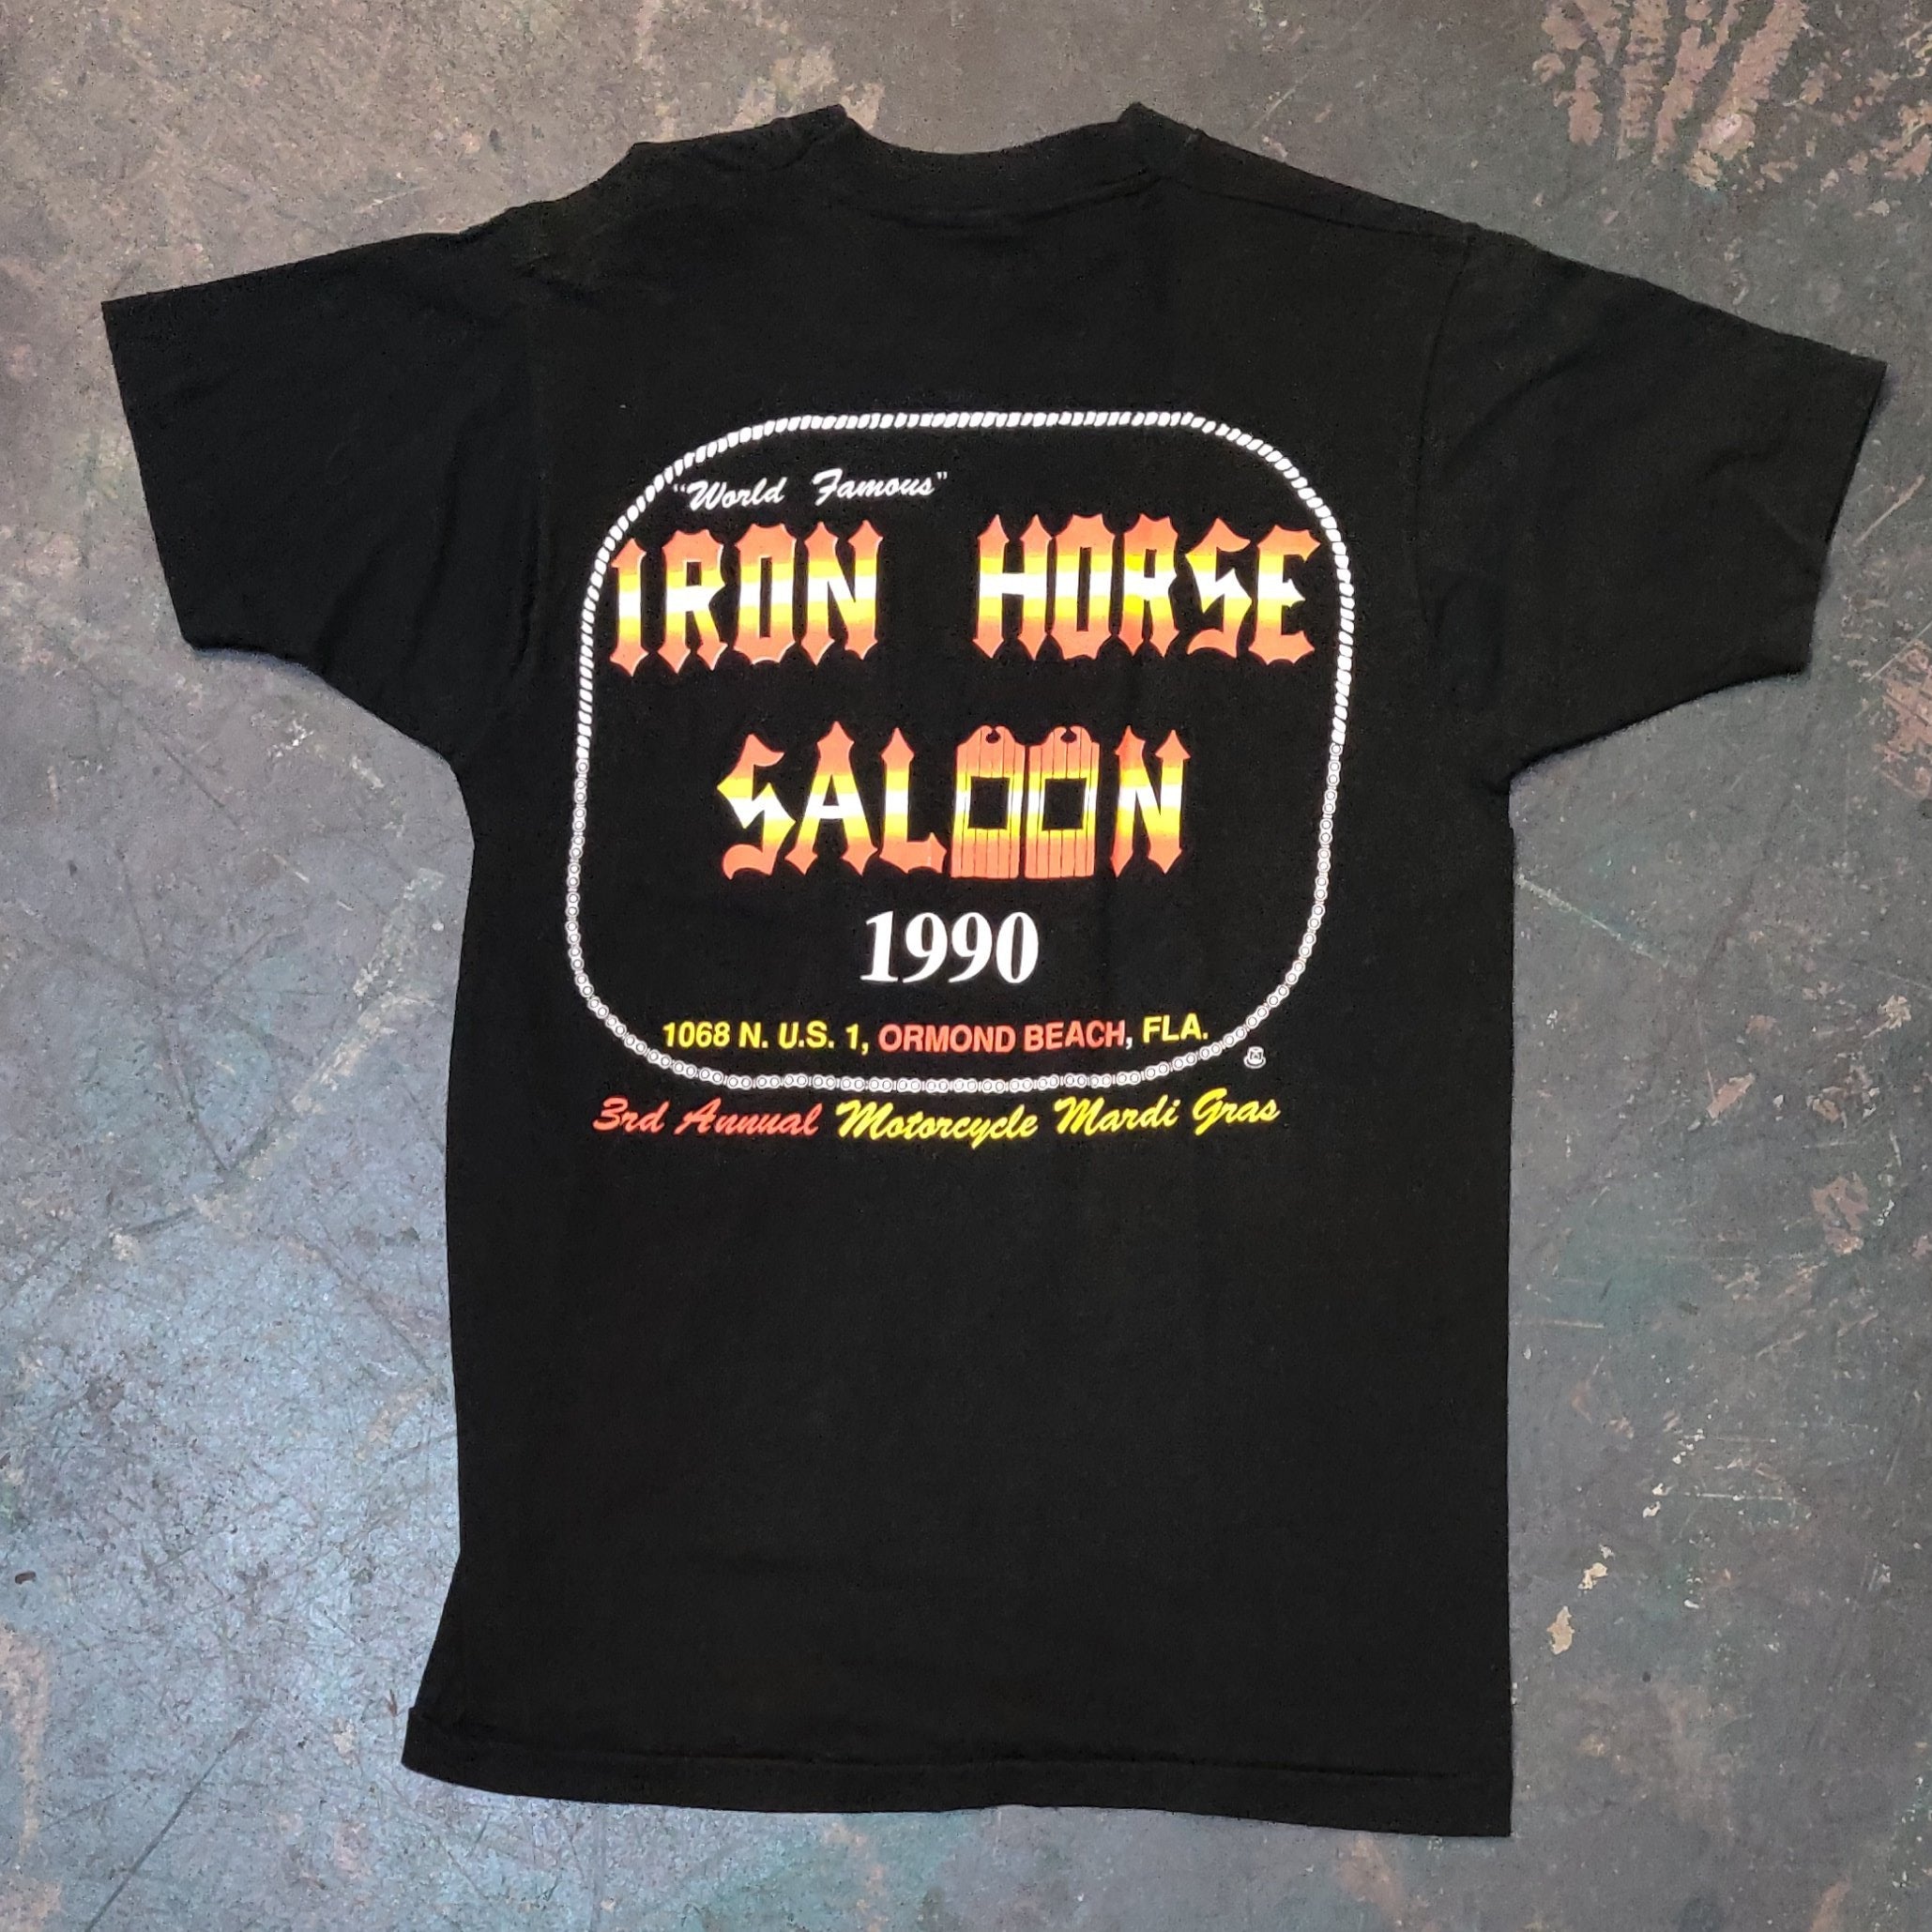 Vintage 1990 Iron Horse Saloon Mortorcycle Mardi Gras Tee Shirt